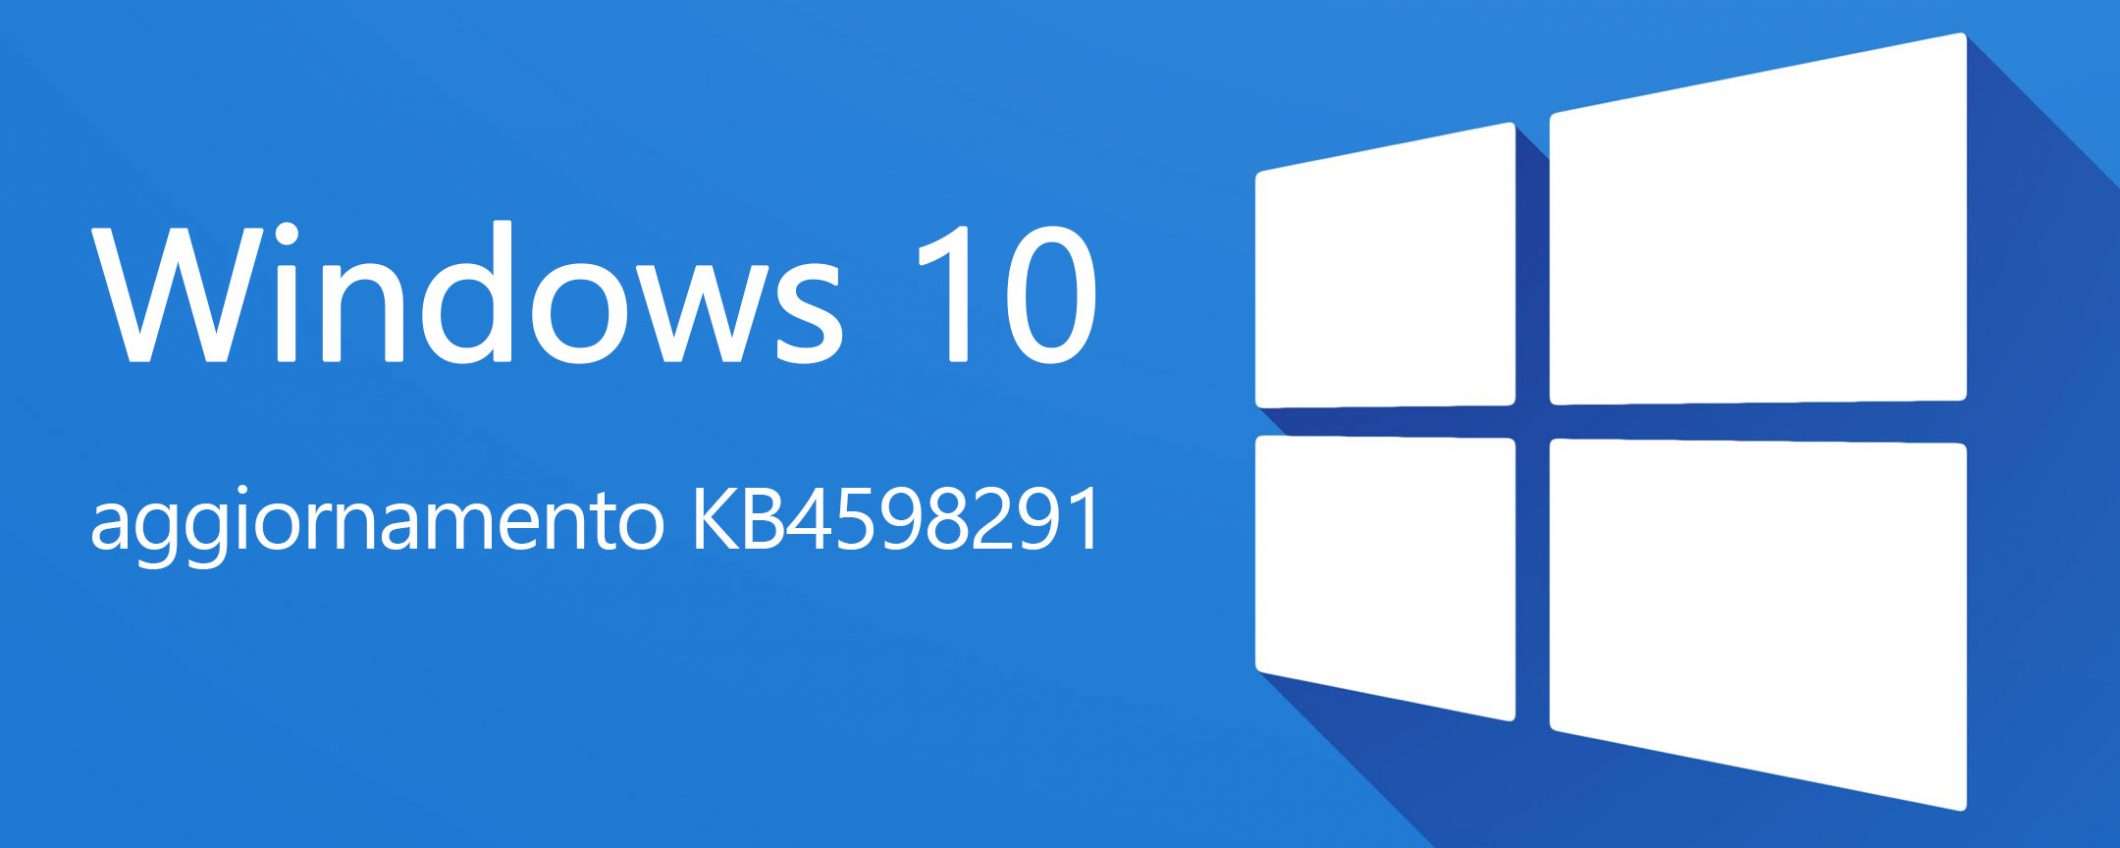 Windows 10: bugfix e bug nell'ultimo update